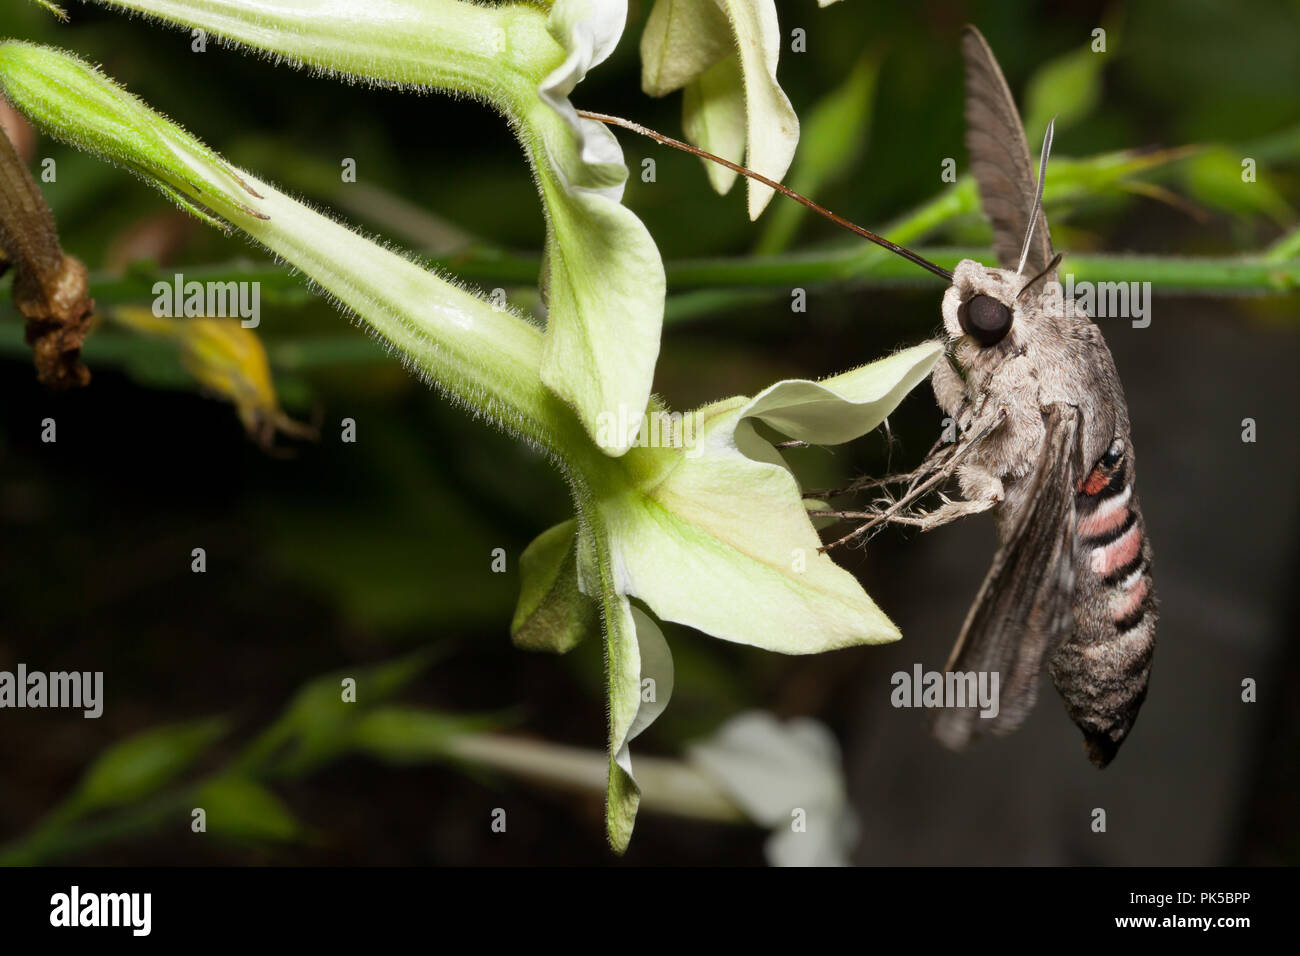 Convolvulus hawk-moth feeding on jasmine tobacco Stock Photo